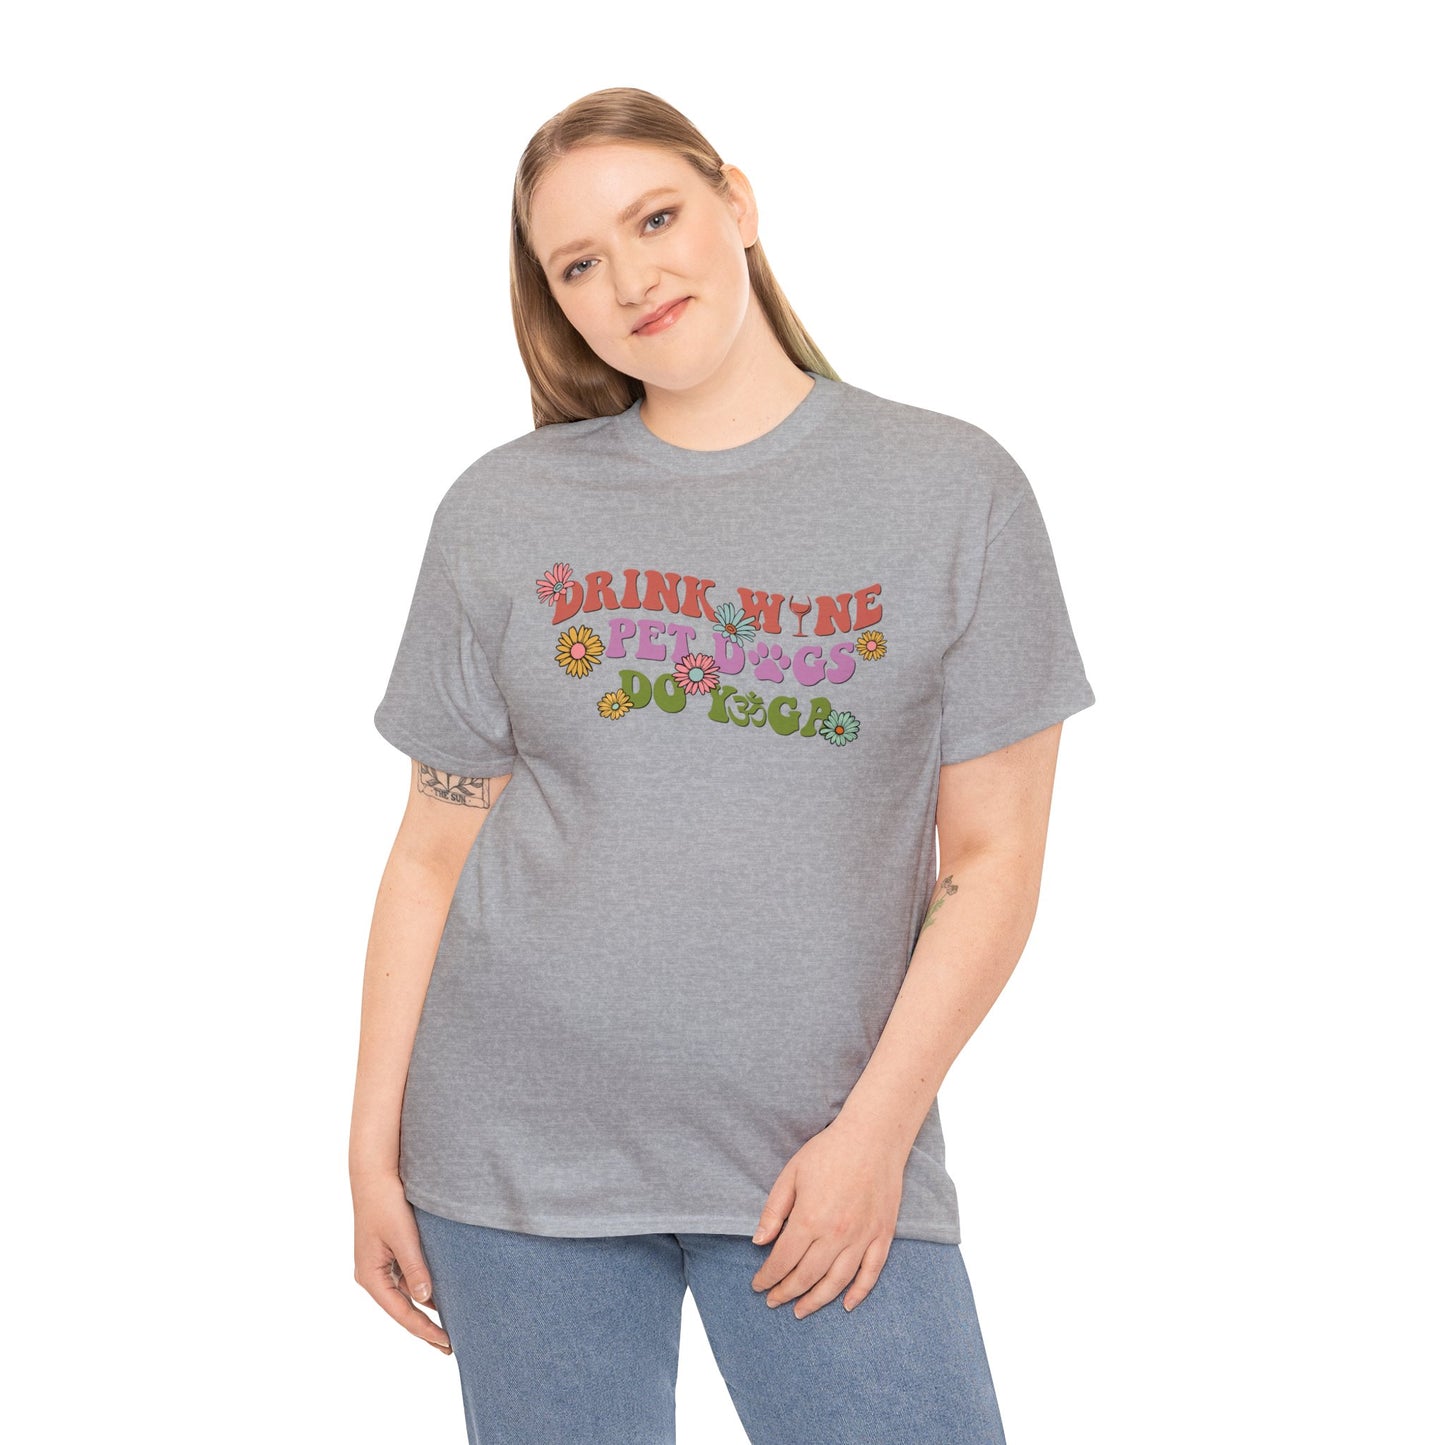 Drink Wine, Pet Dog, Do Yoga - Exclusive Yoga T-shirt - Unisex Heavy Cotton Tee